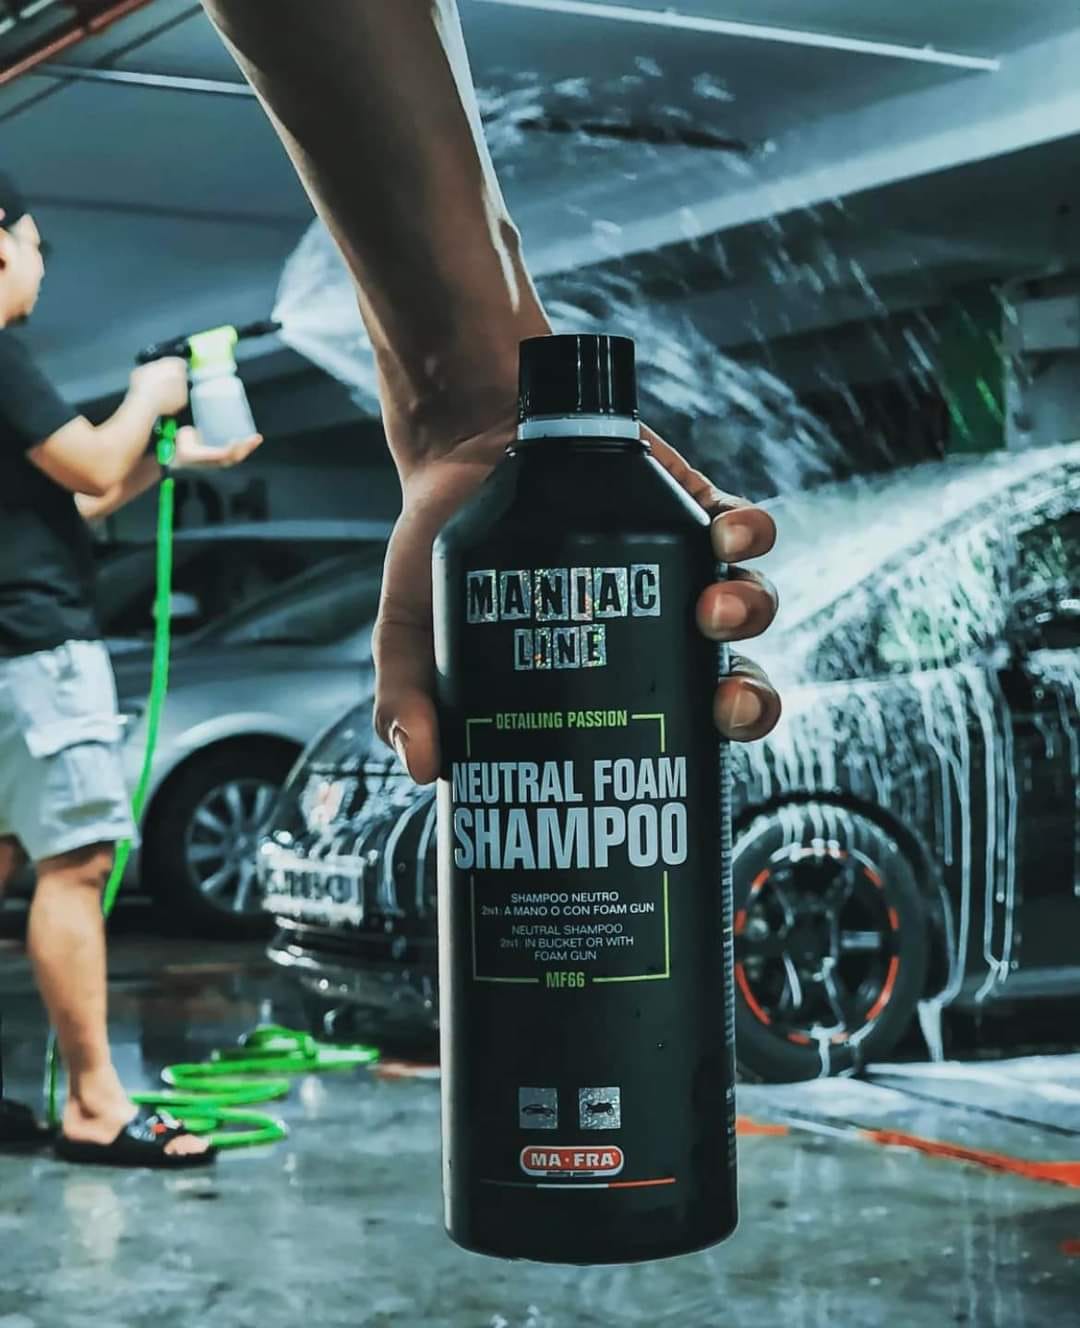 Neutral foam shampoo Maniac line